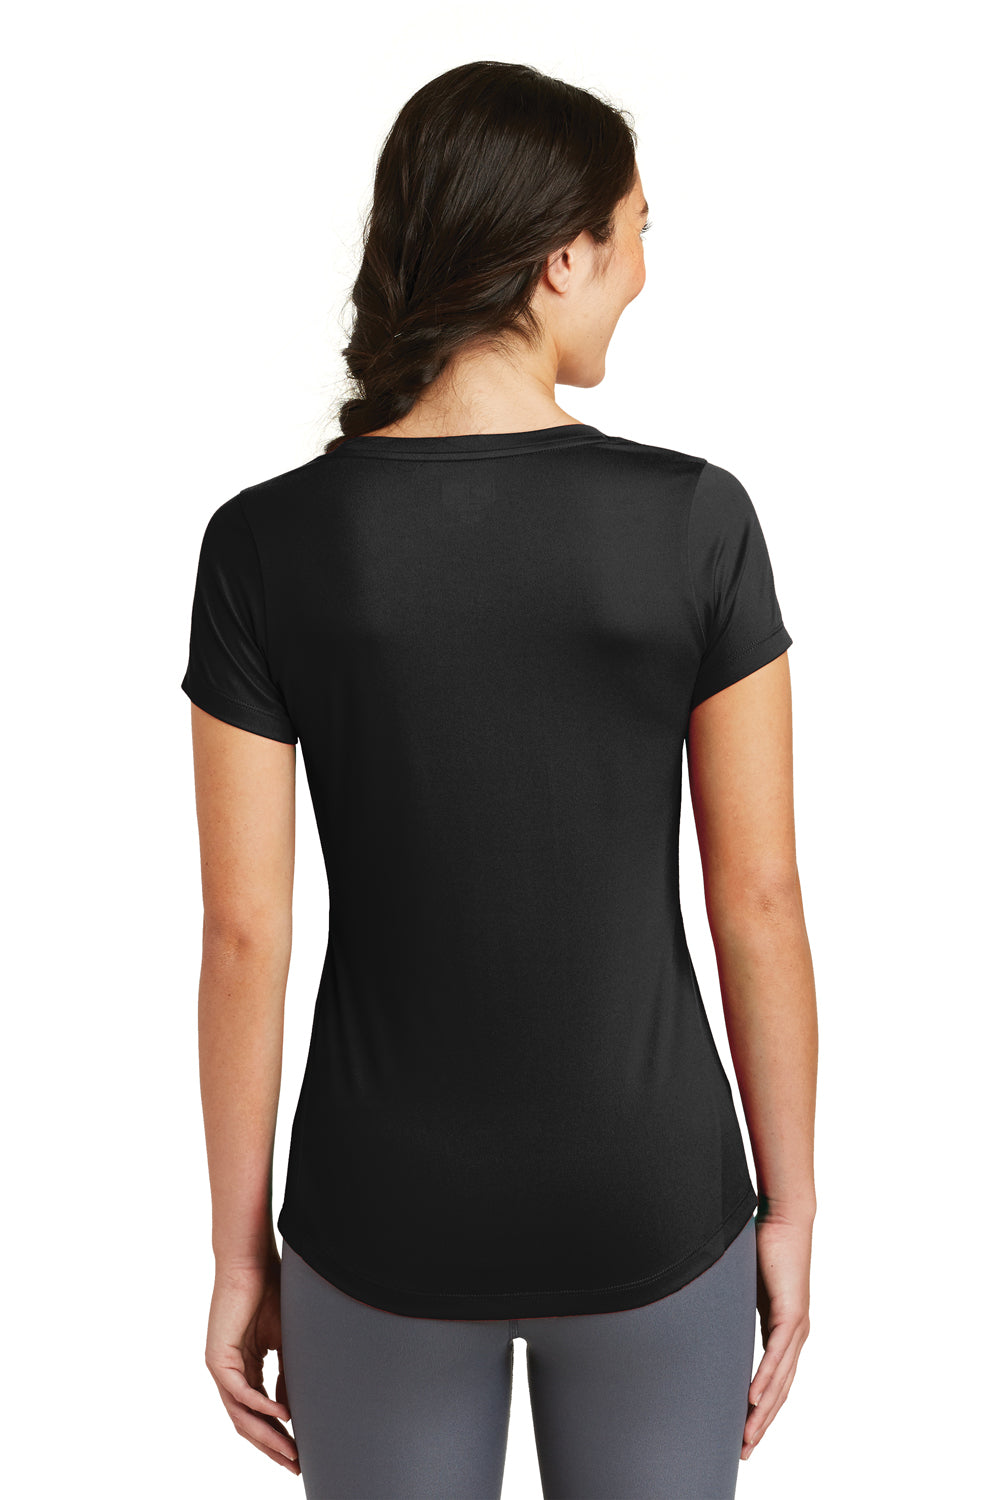 New Era LNEA200 Womens Series Performance Jersey Moisture Wicking Short Sleeve Crewneck T-Shirt Black Back